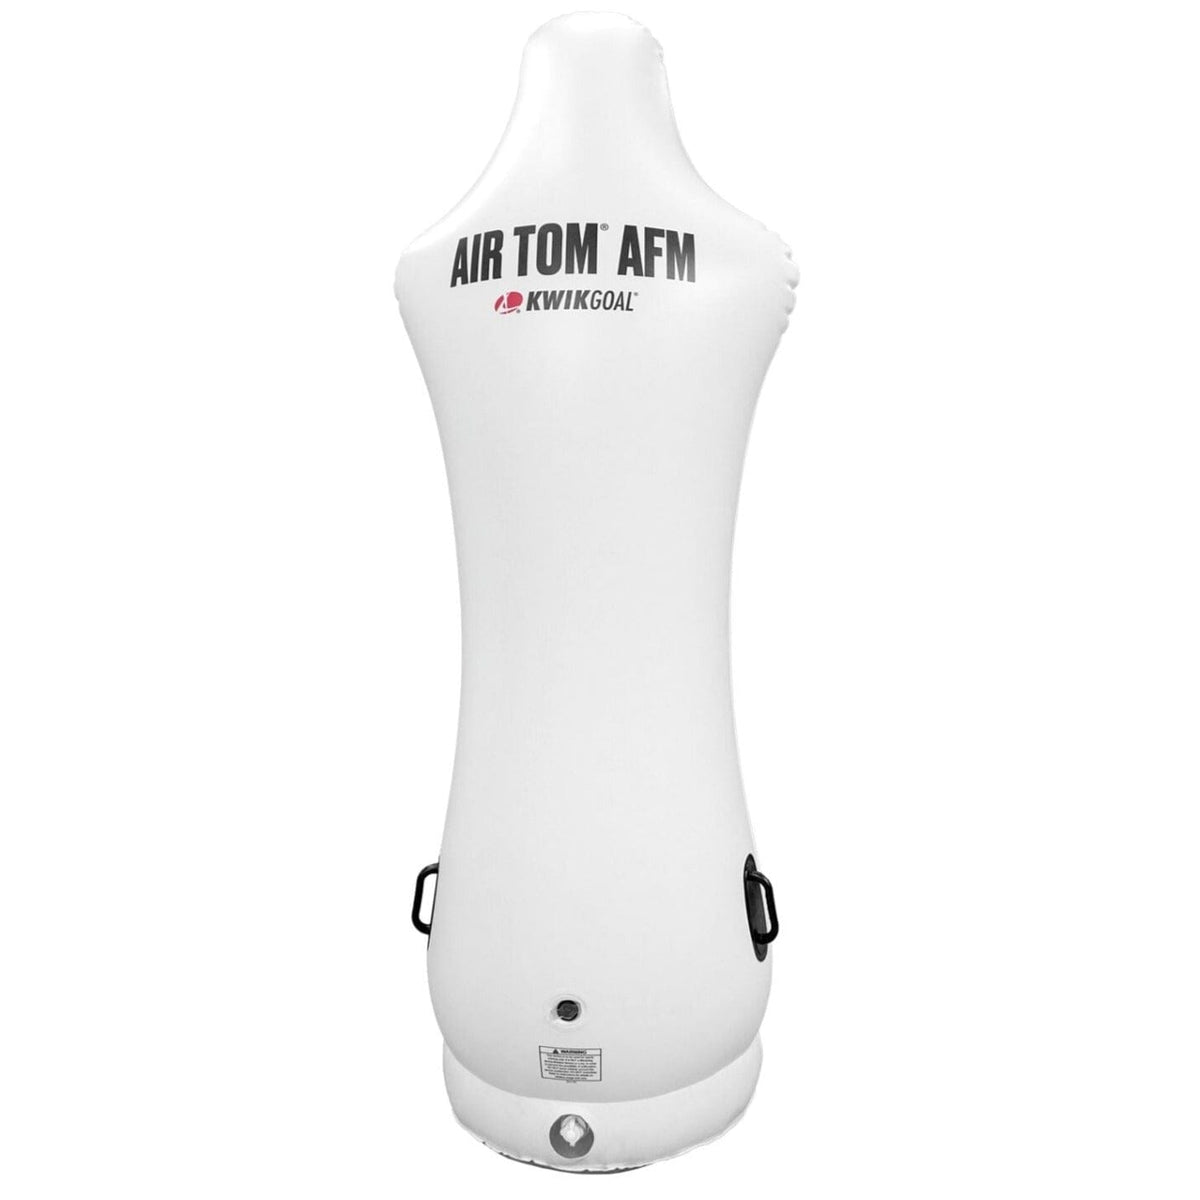 Kwikgoal Air Tom® AFM | 16B3704 Goal accessories Kwikgoal 